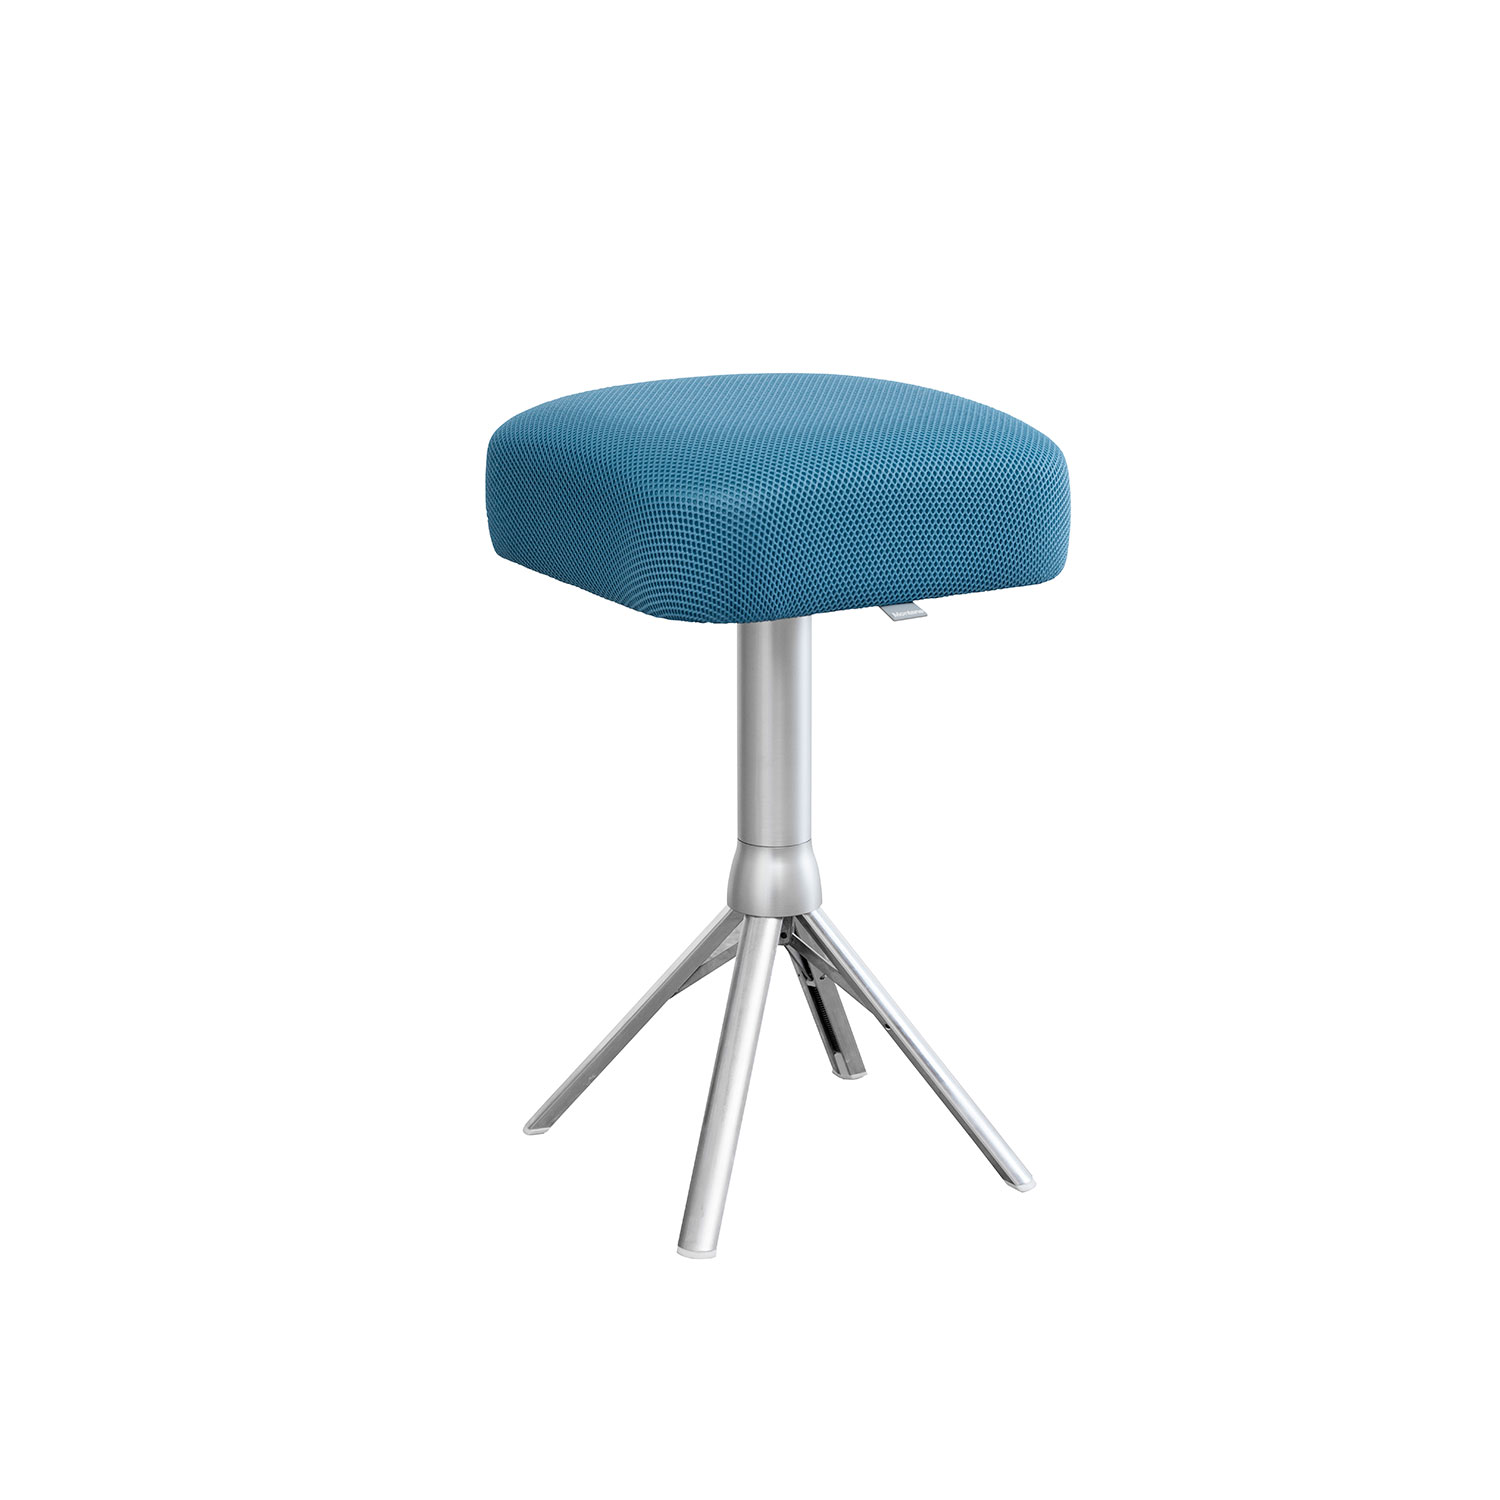 Guest foldable stool, Umi (aqua blue)